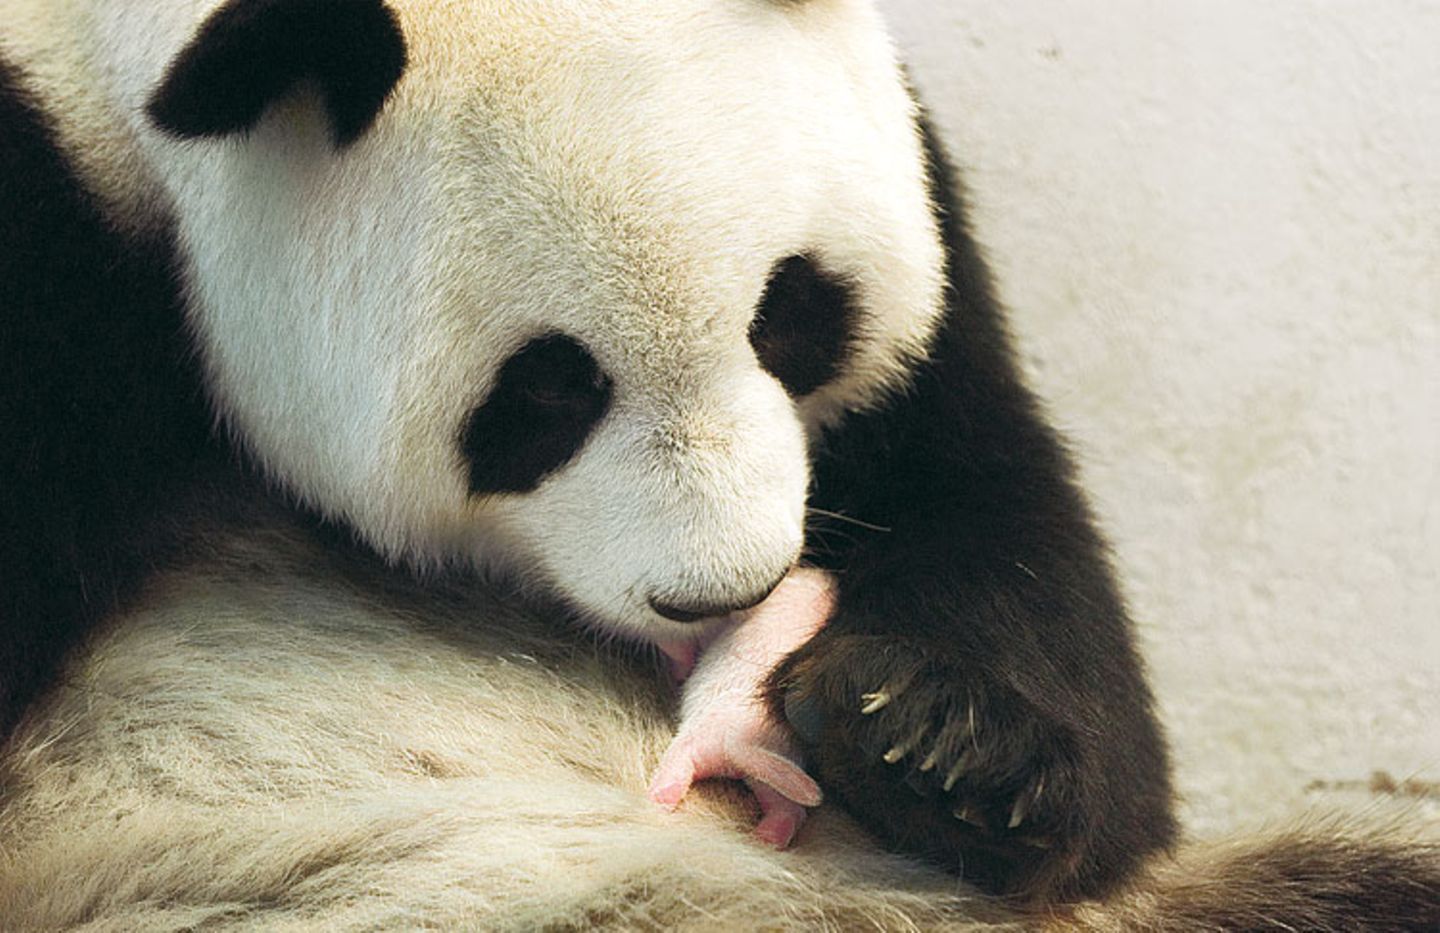 Fotoshow: Pandabären